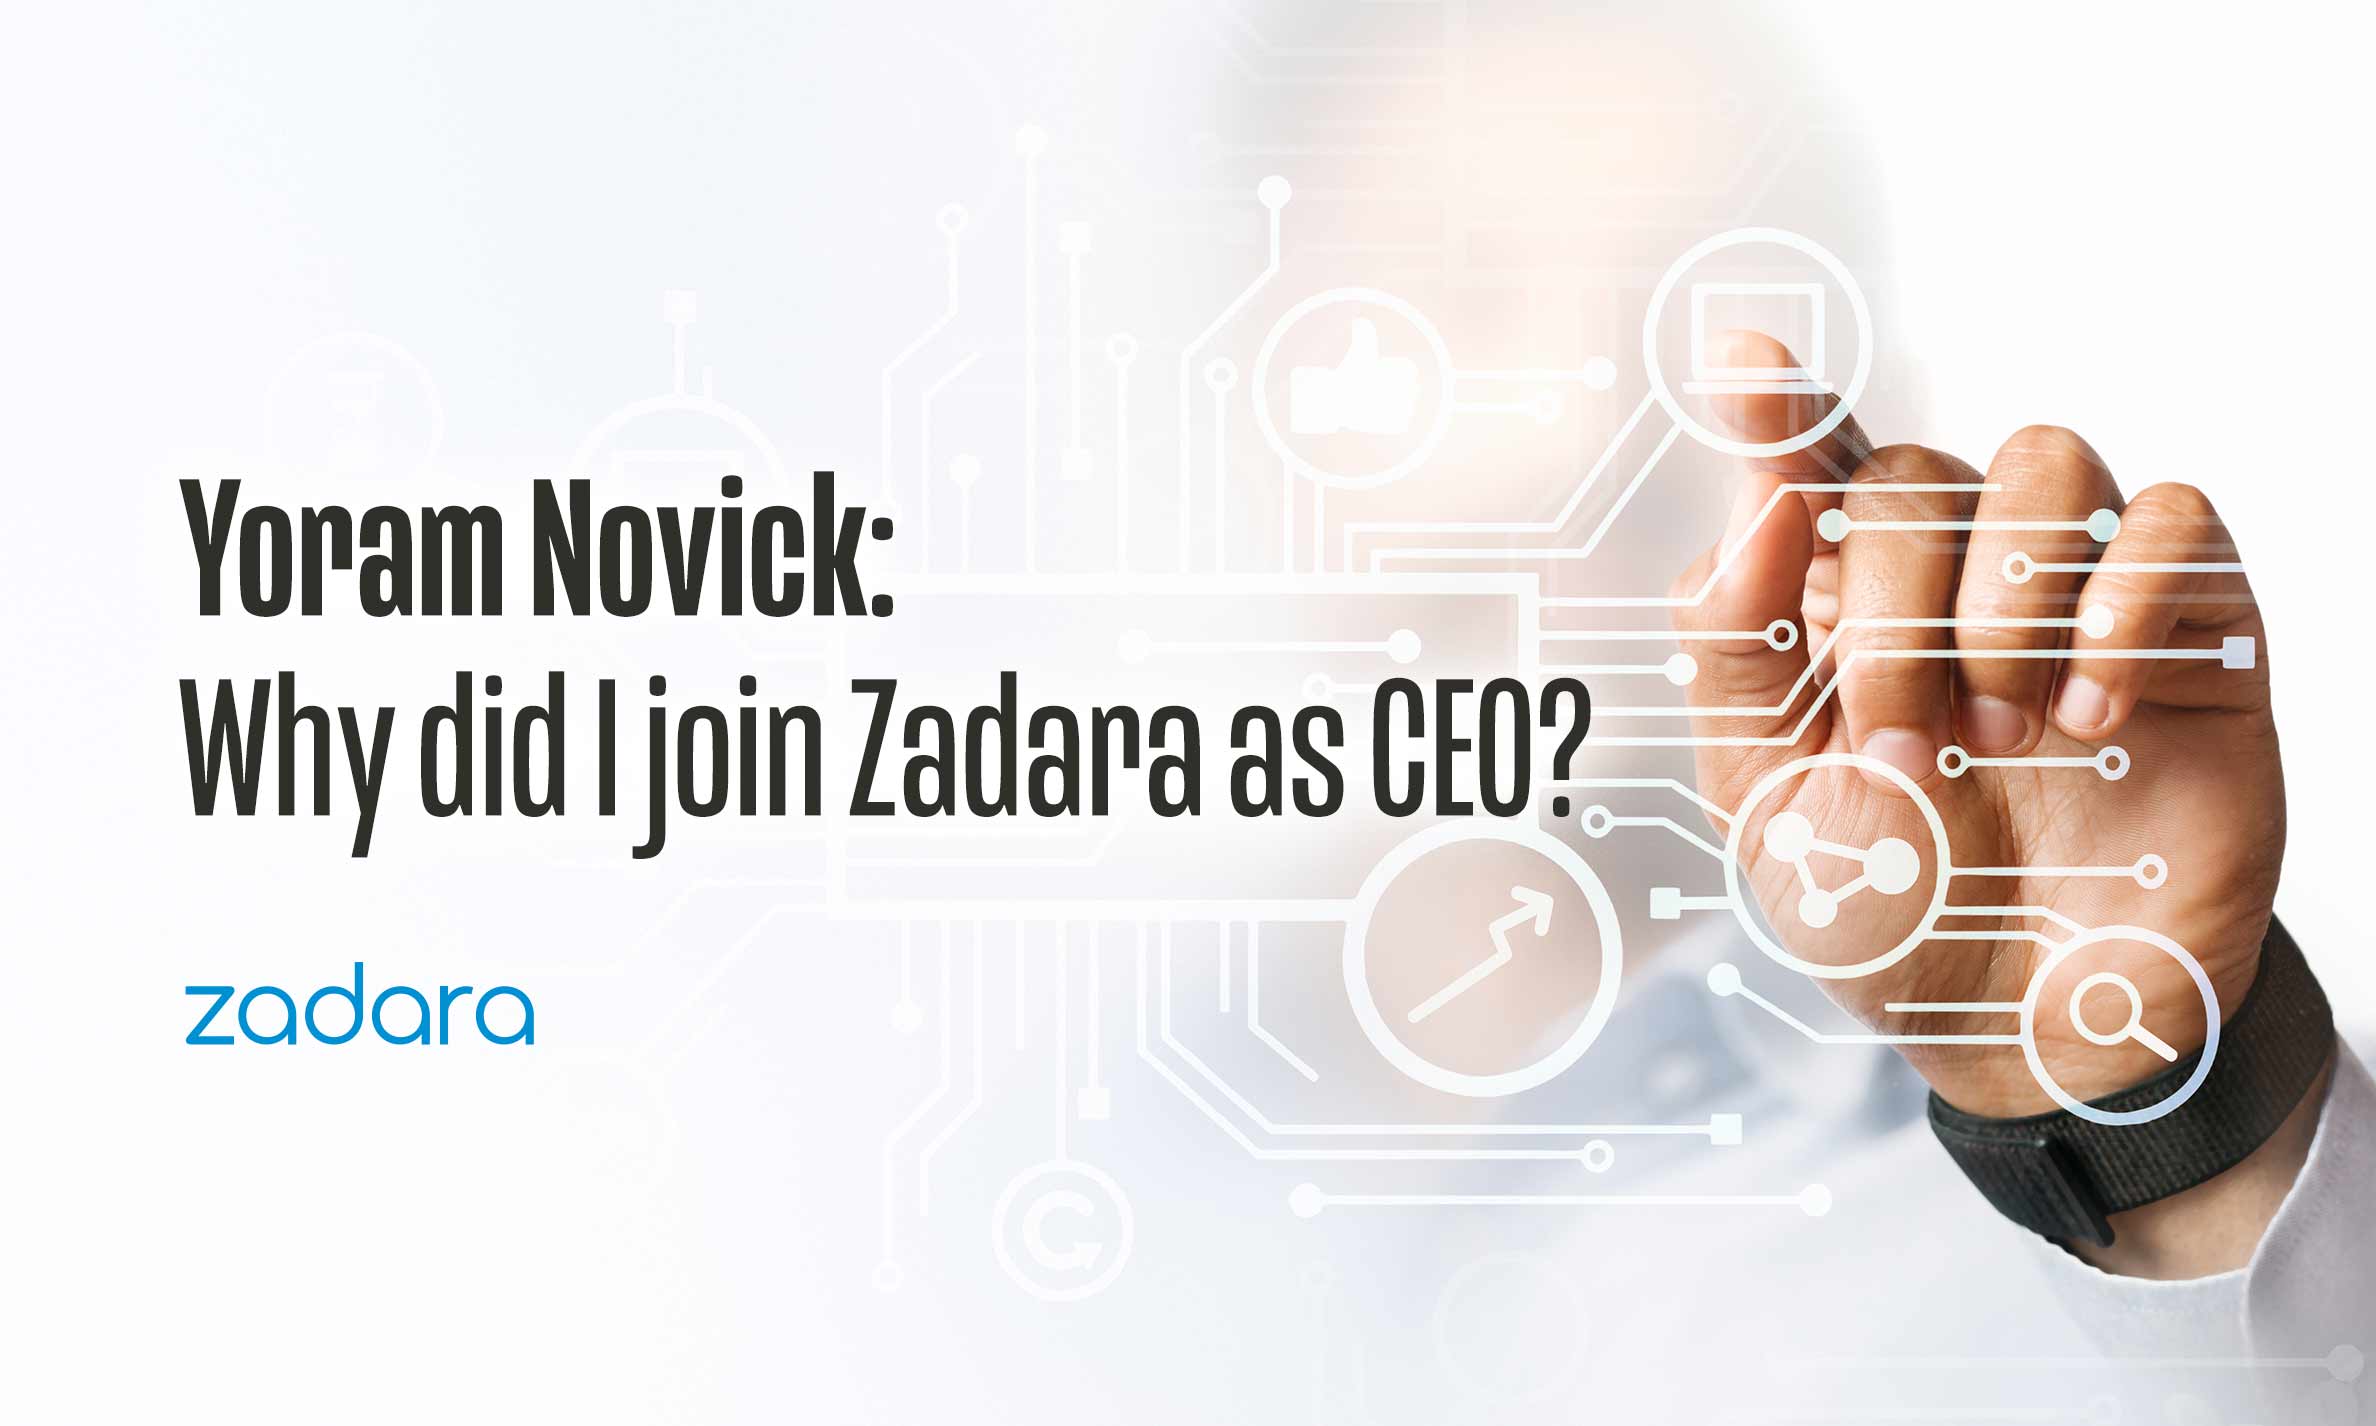 Yoram Novick: Why did I join Zadara as CEO?